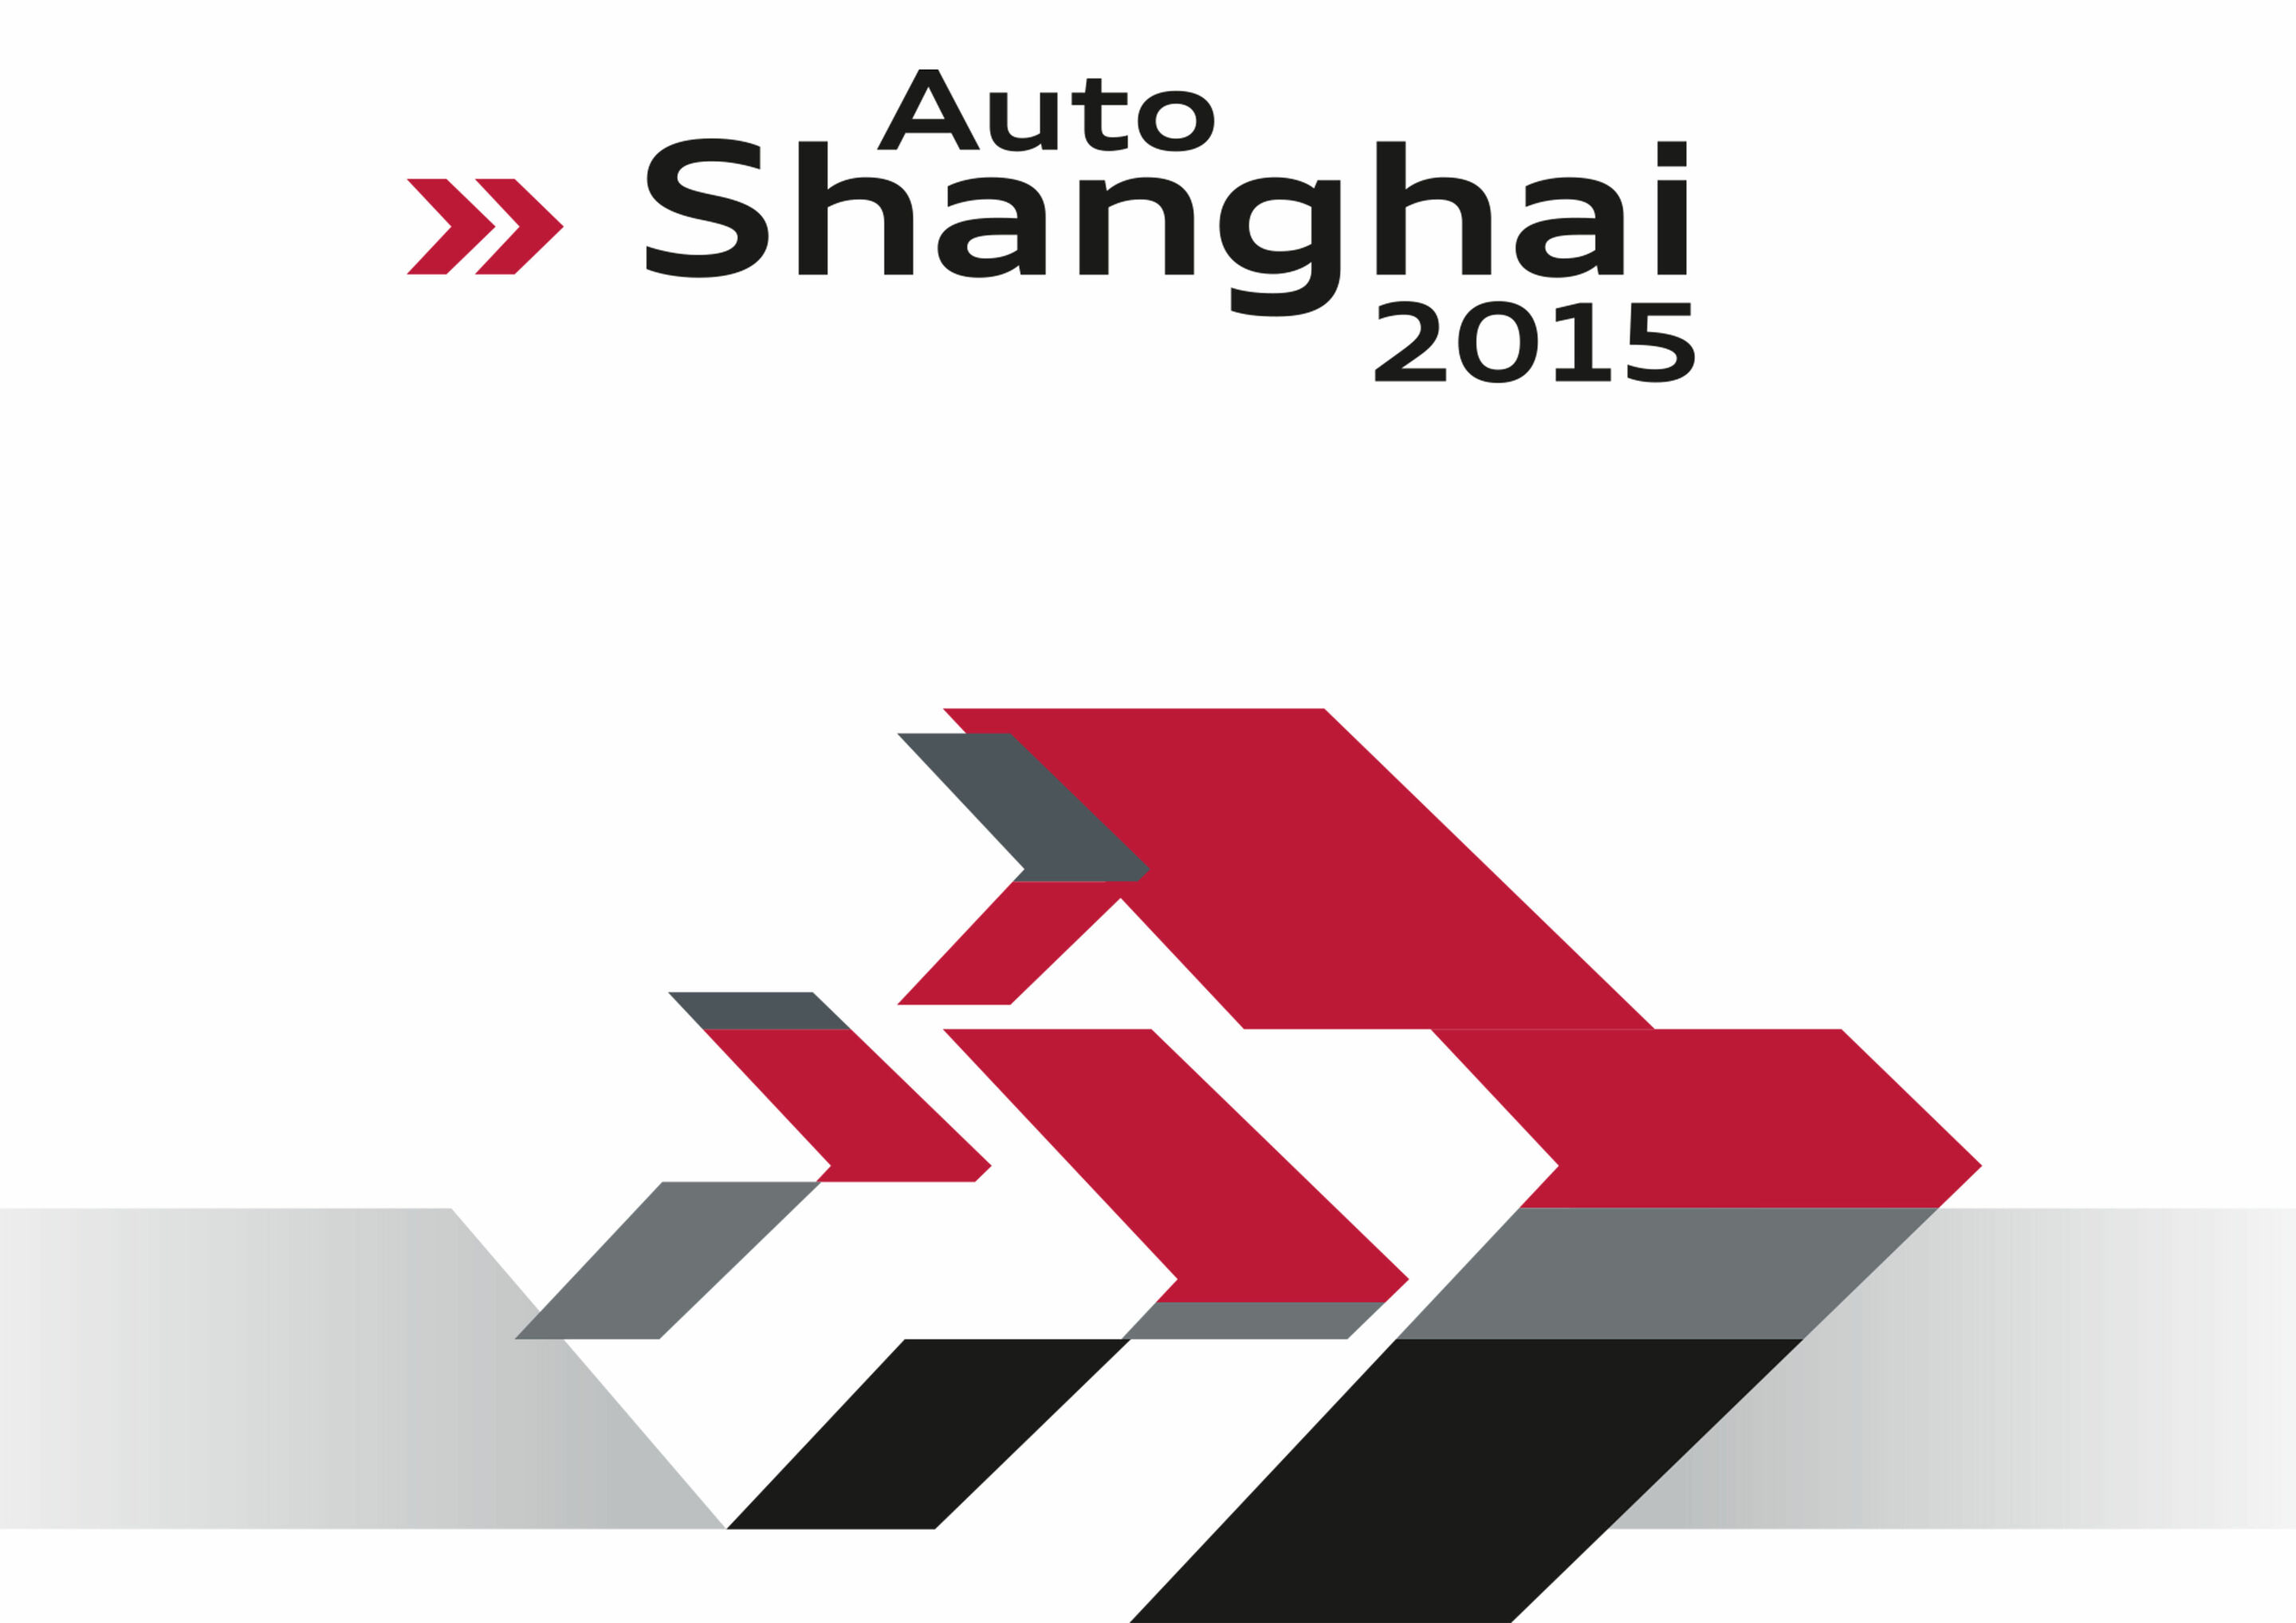 Auto Shanghai 2015